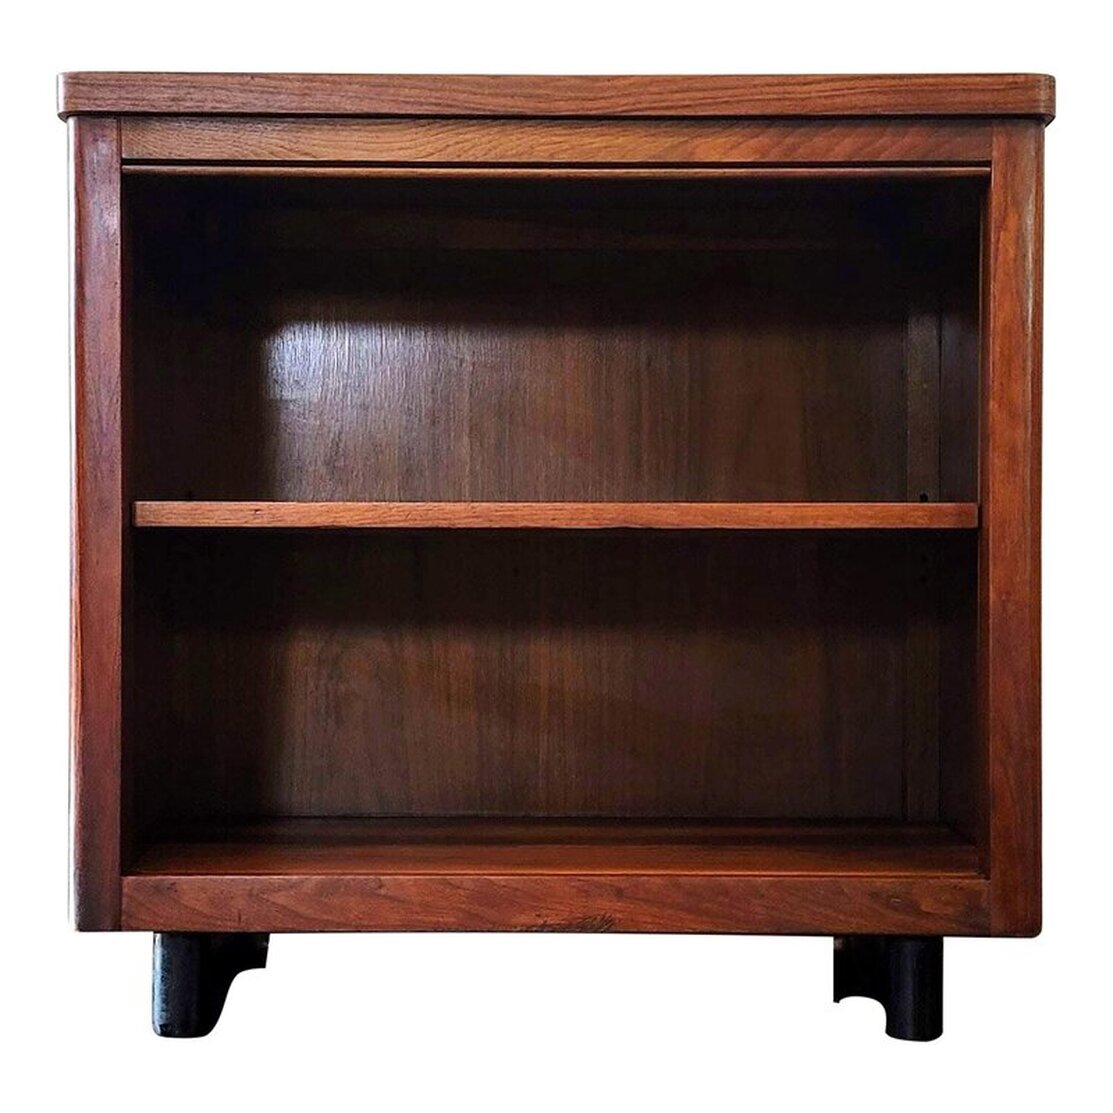 Alma Desk Company walnut bookcase with ebonized feet. 30ʺW × 16ʺD × 29.25ʺH.